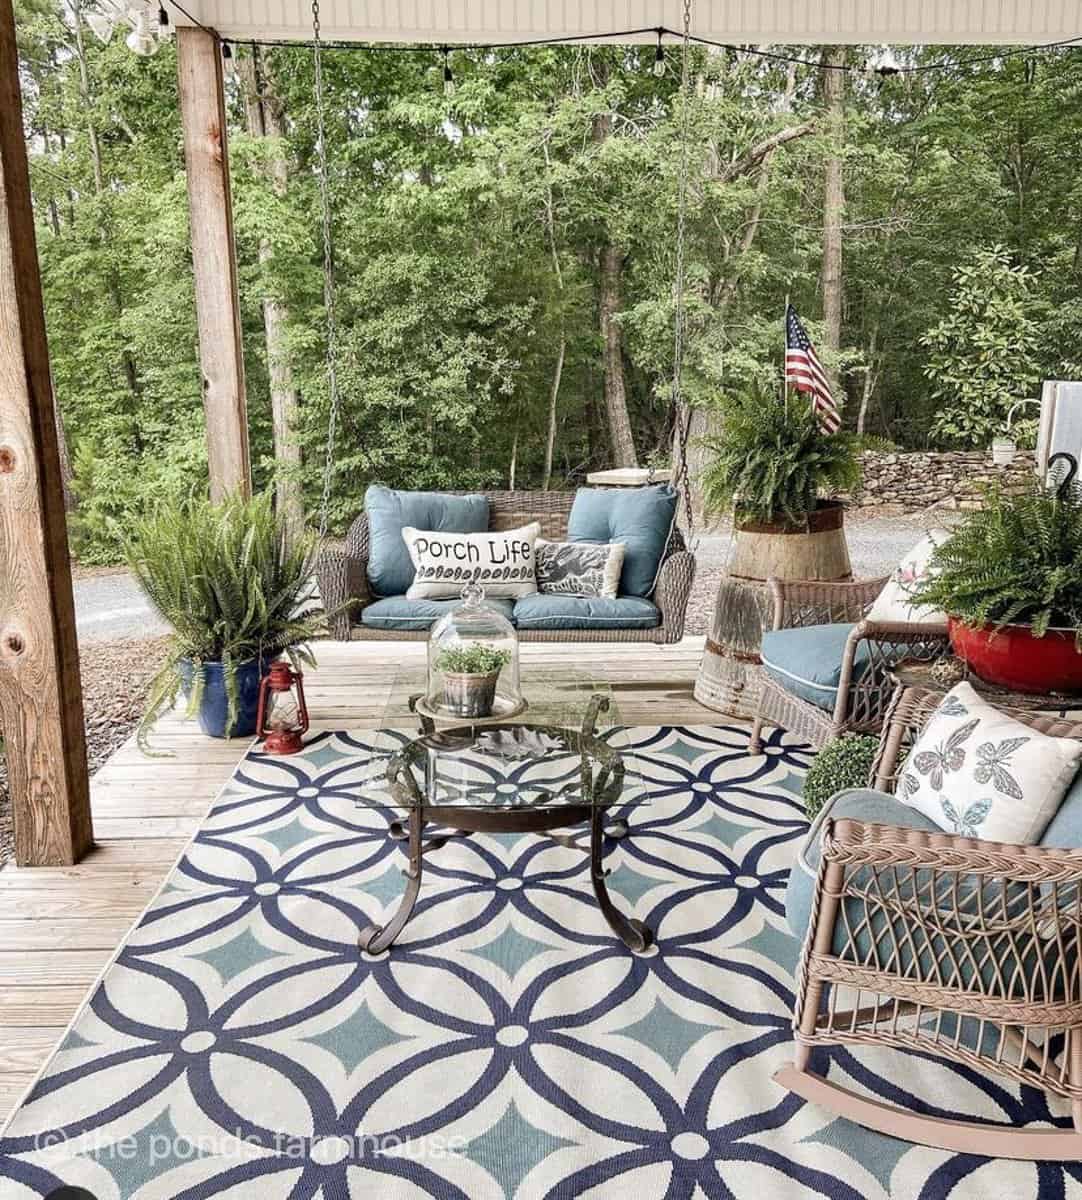 https://www.thepondsfarmhouse.com/wp-content/uploads/2021/06/outdoor-rugs-2.jpg